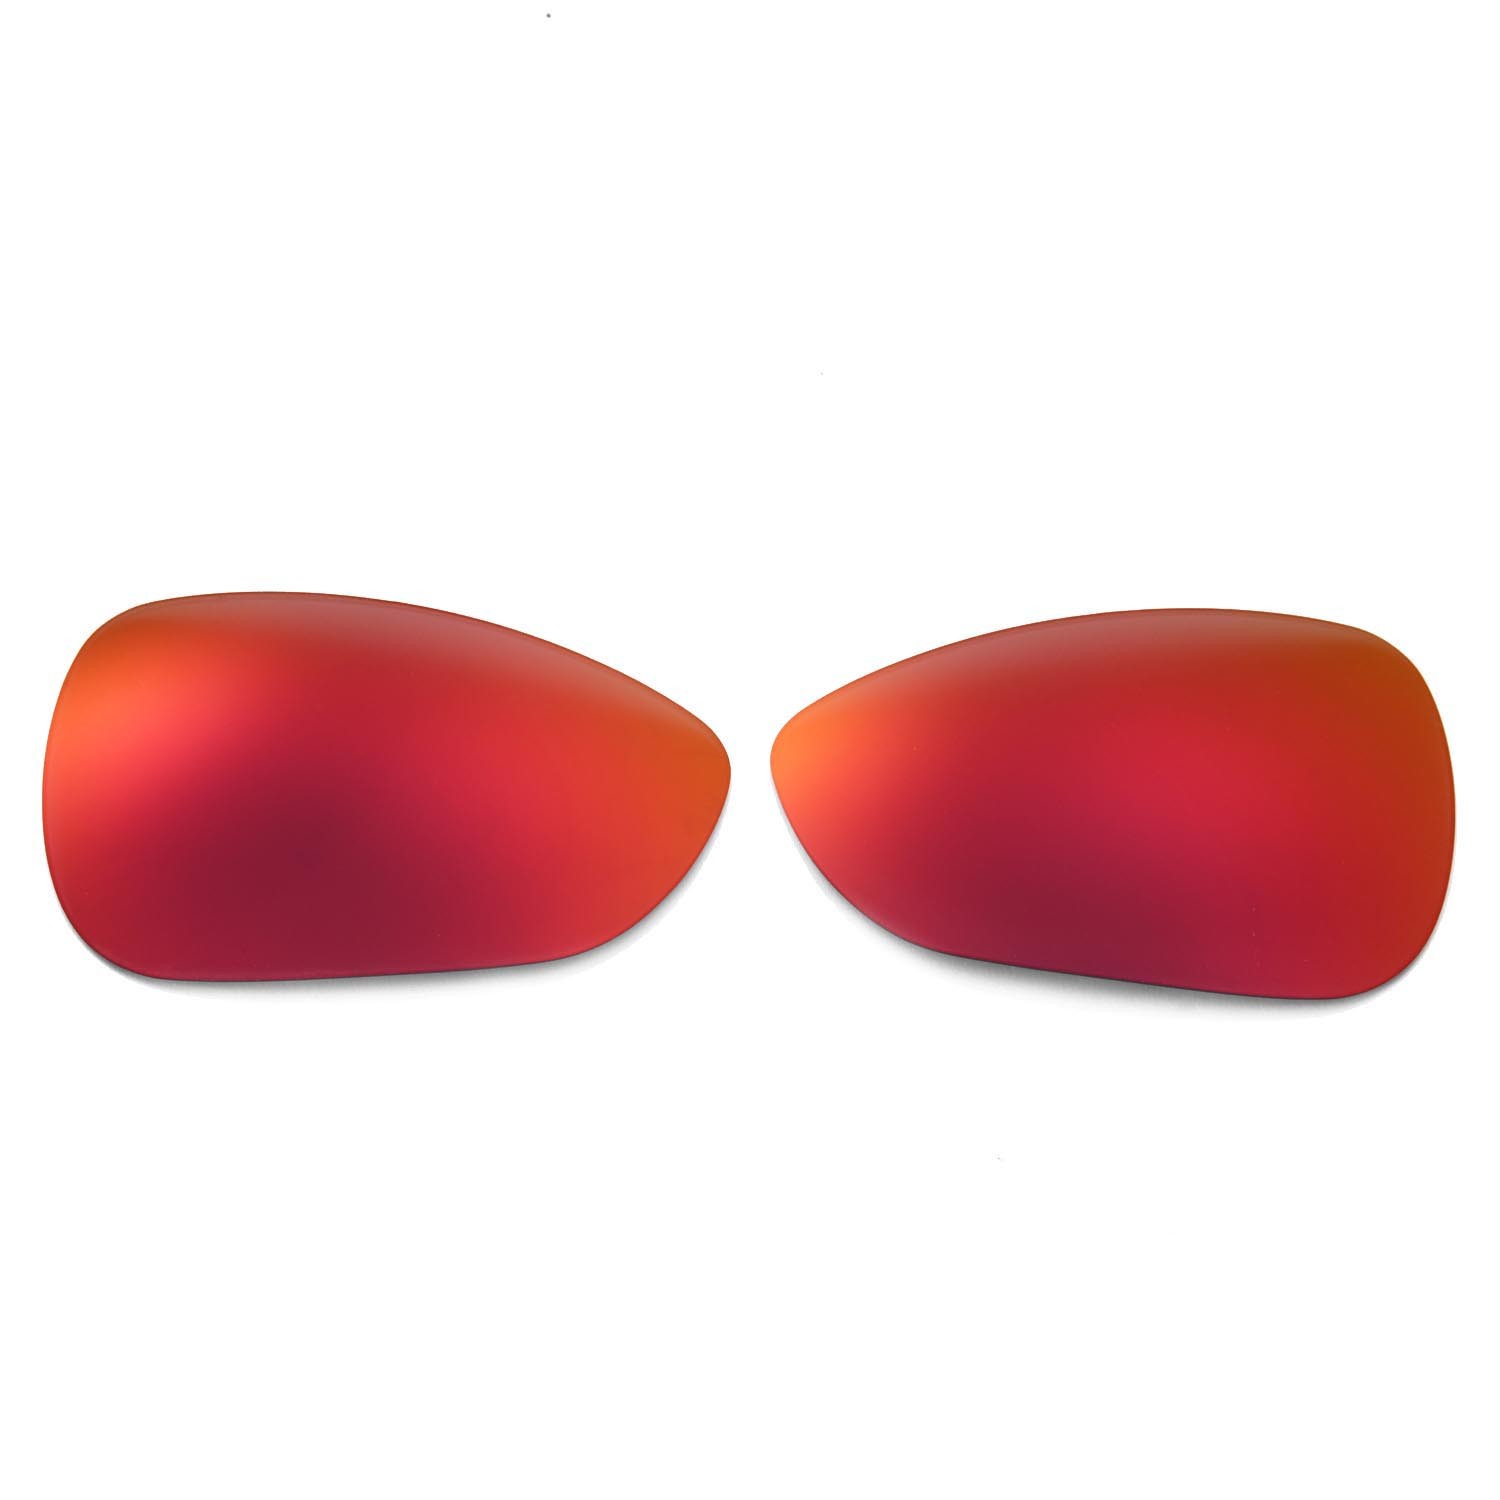 2021 factory directly sale sunglasses lenses sun glasses polarized lens